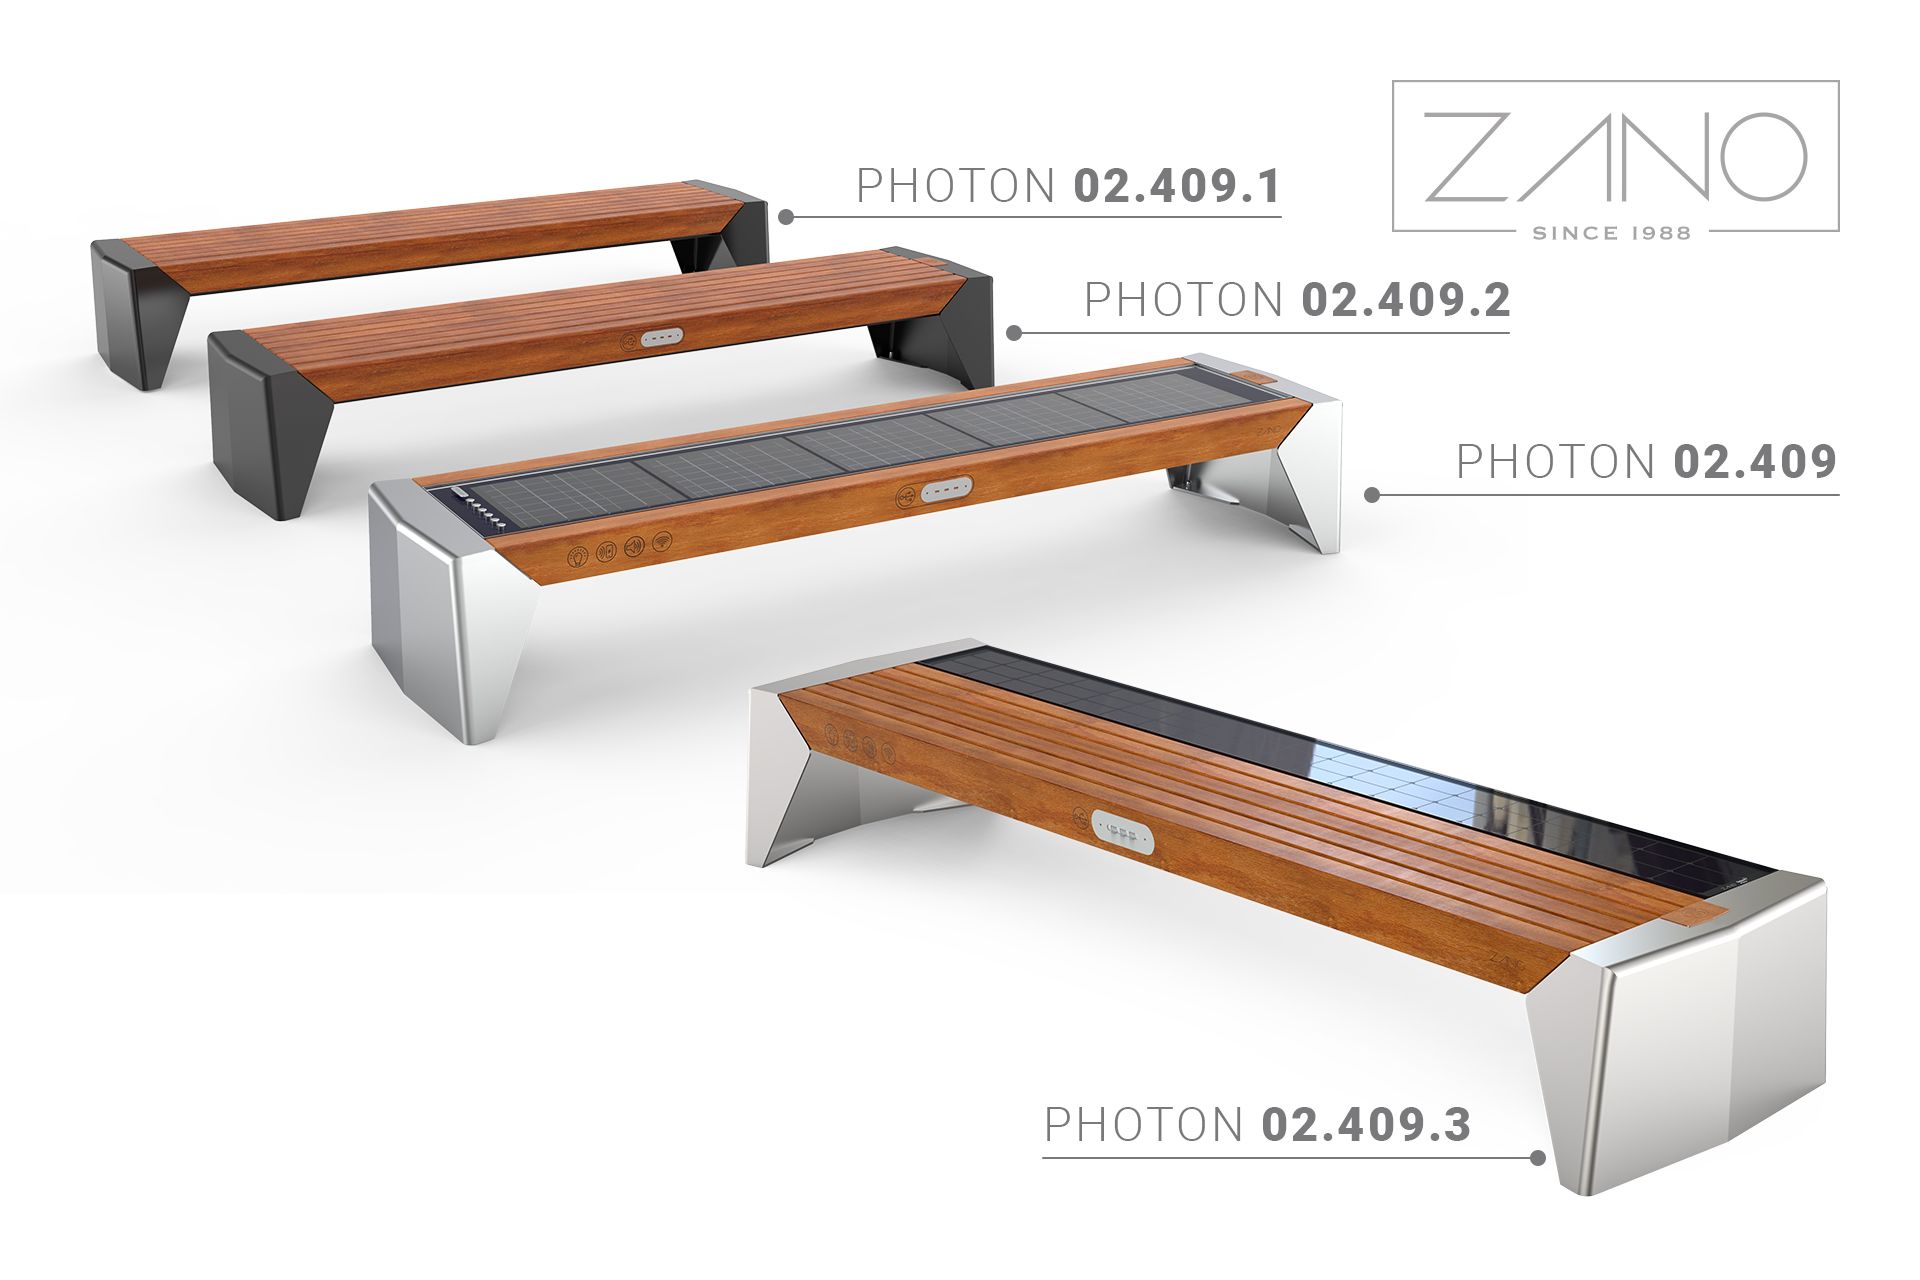 Photon solar benches | ZANO Smart City